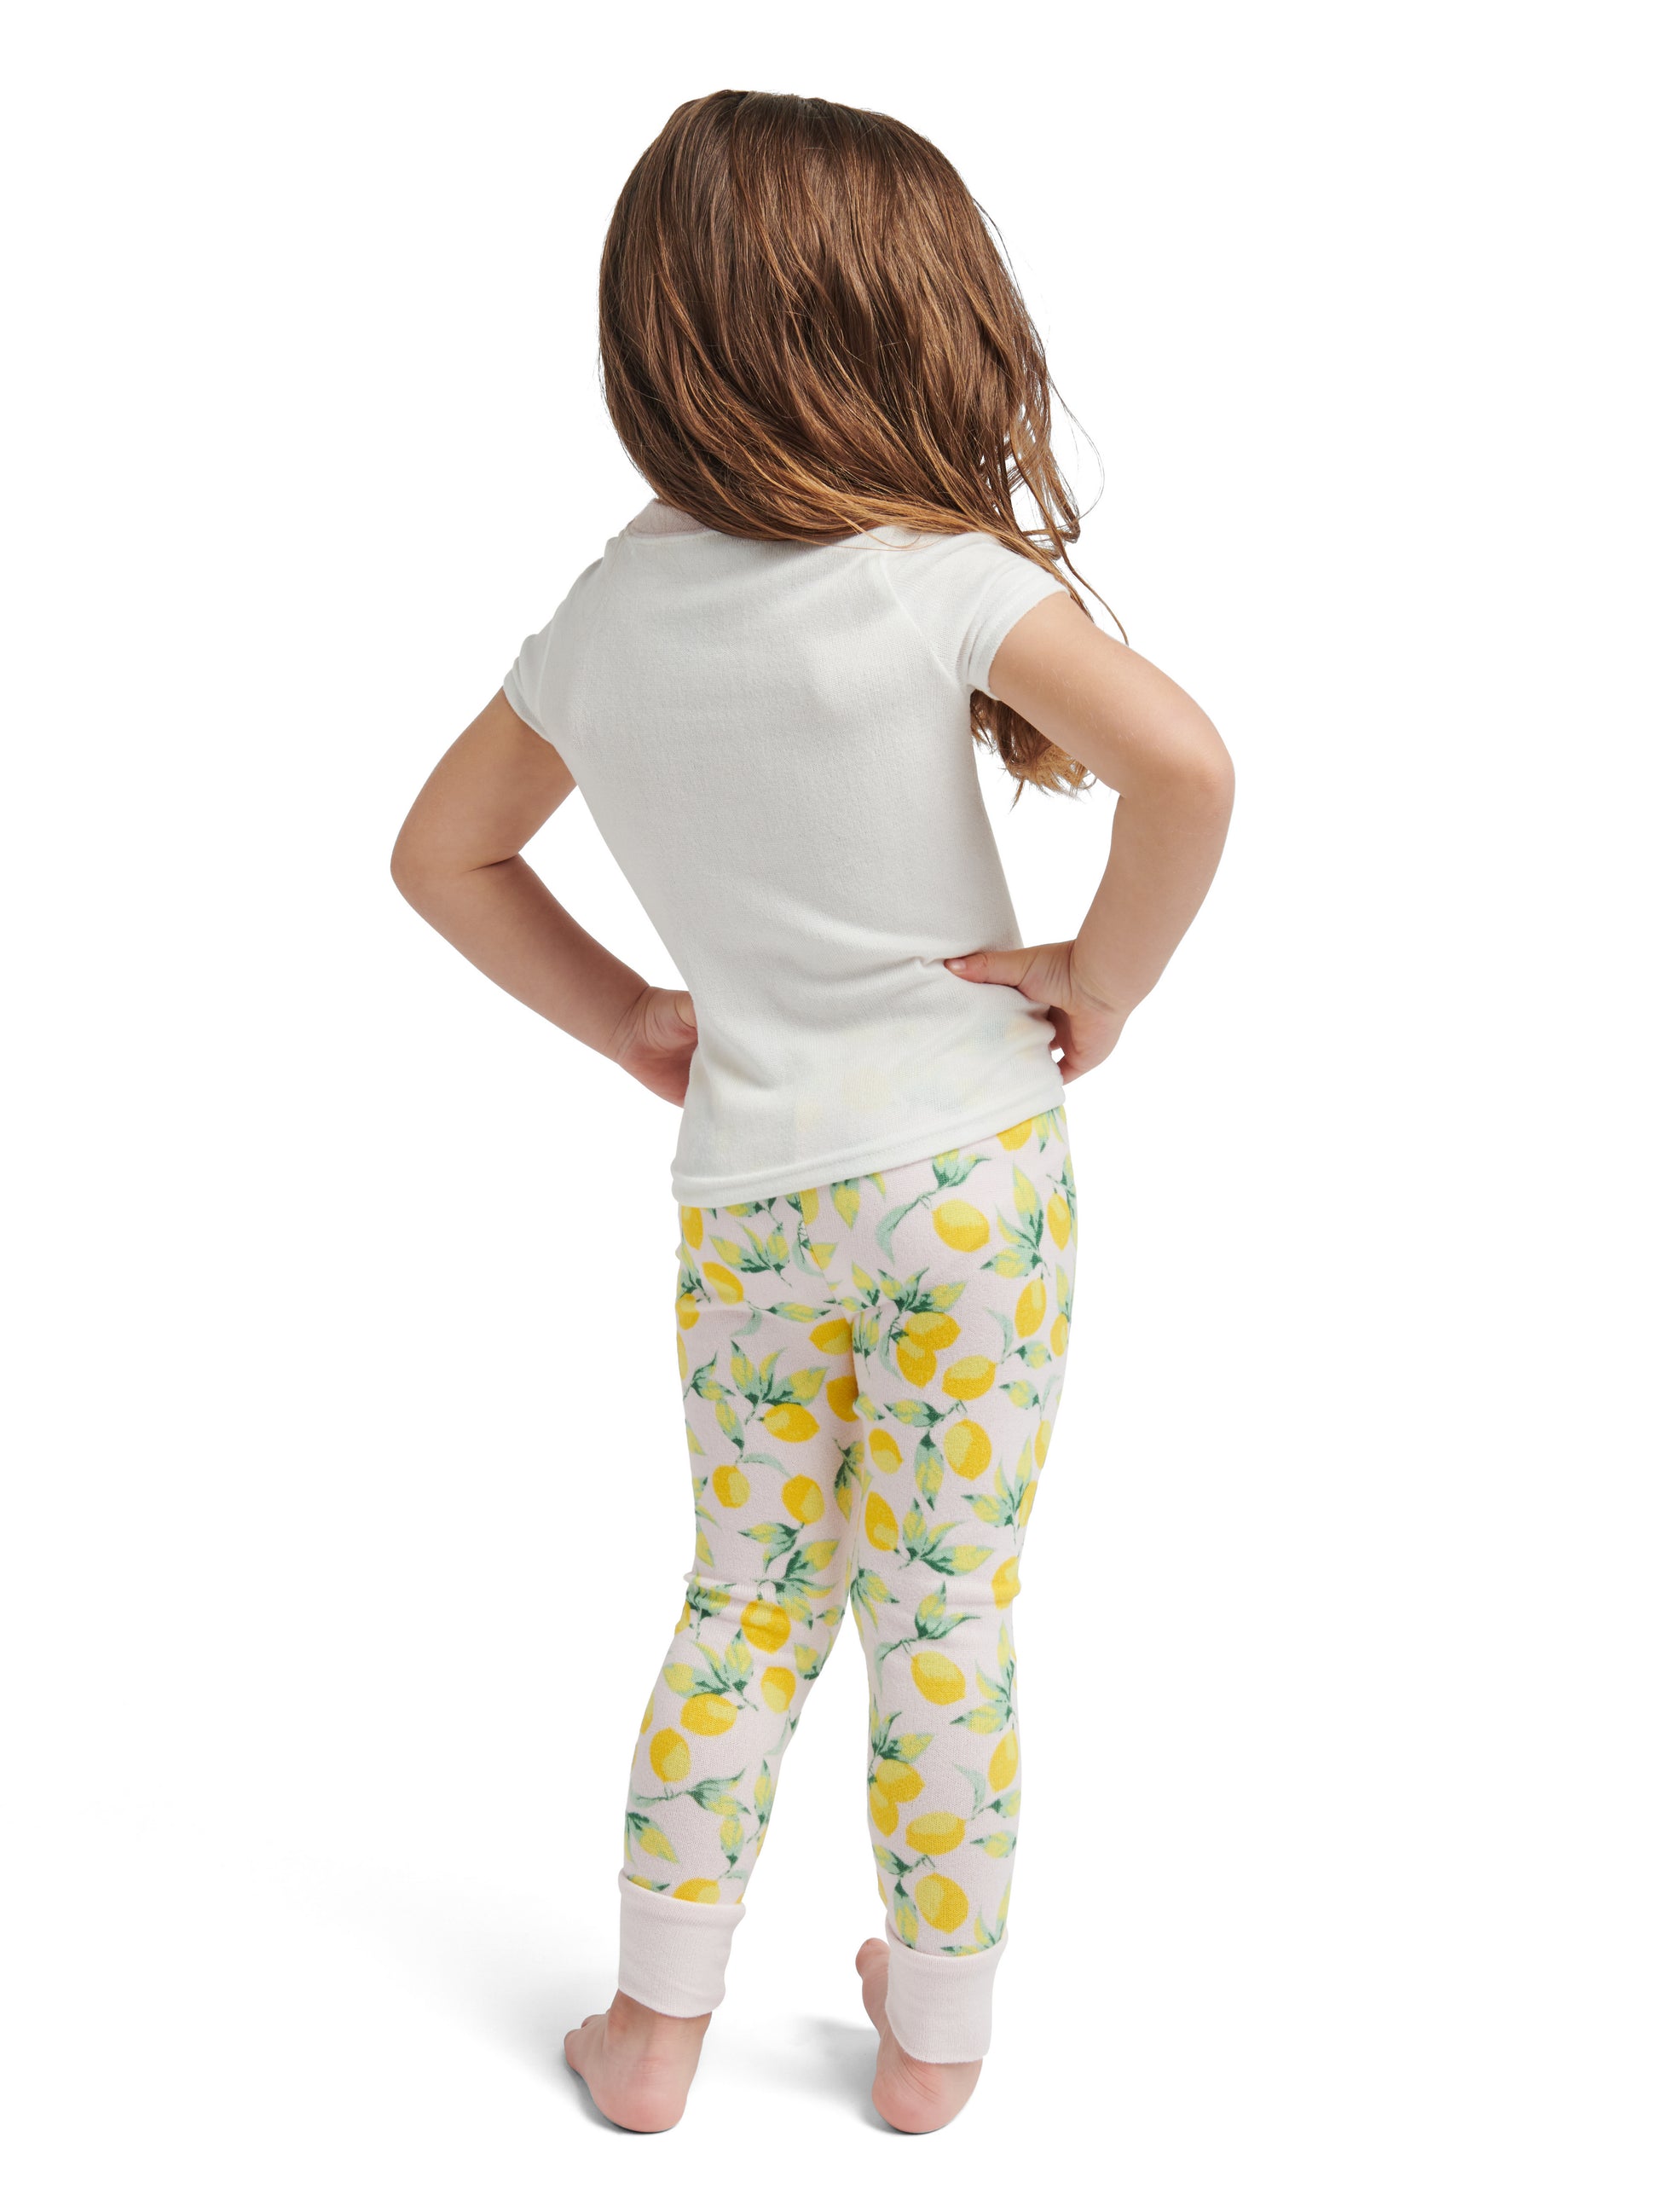 Girl's "MAMAS MAIN SQUEEZE" Short Sleeve Tee and Jogger Pajama Set - Rae Dunn Wear - G Pant Set